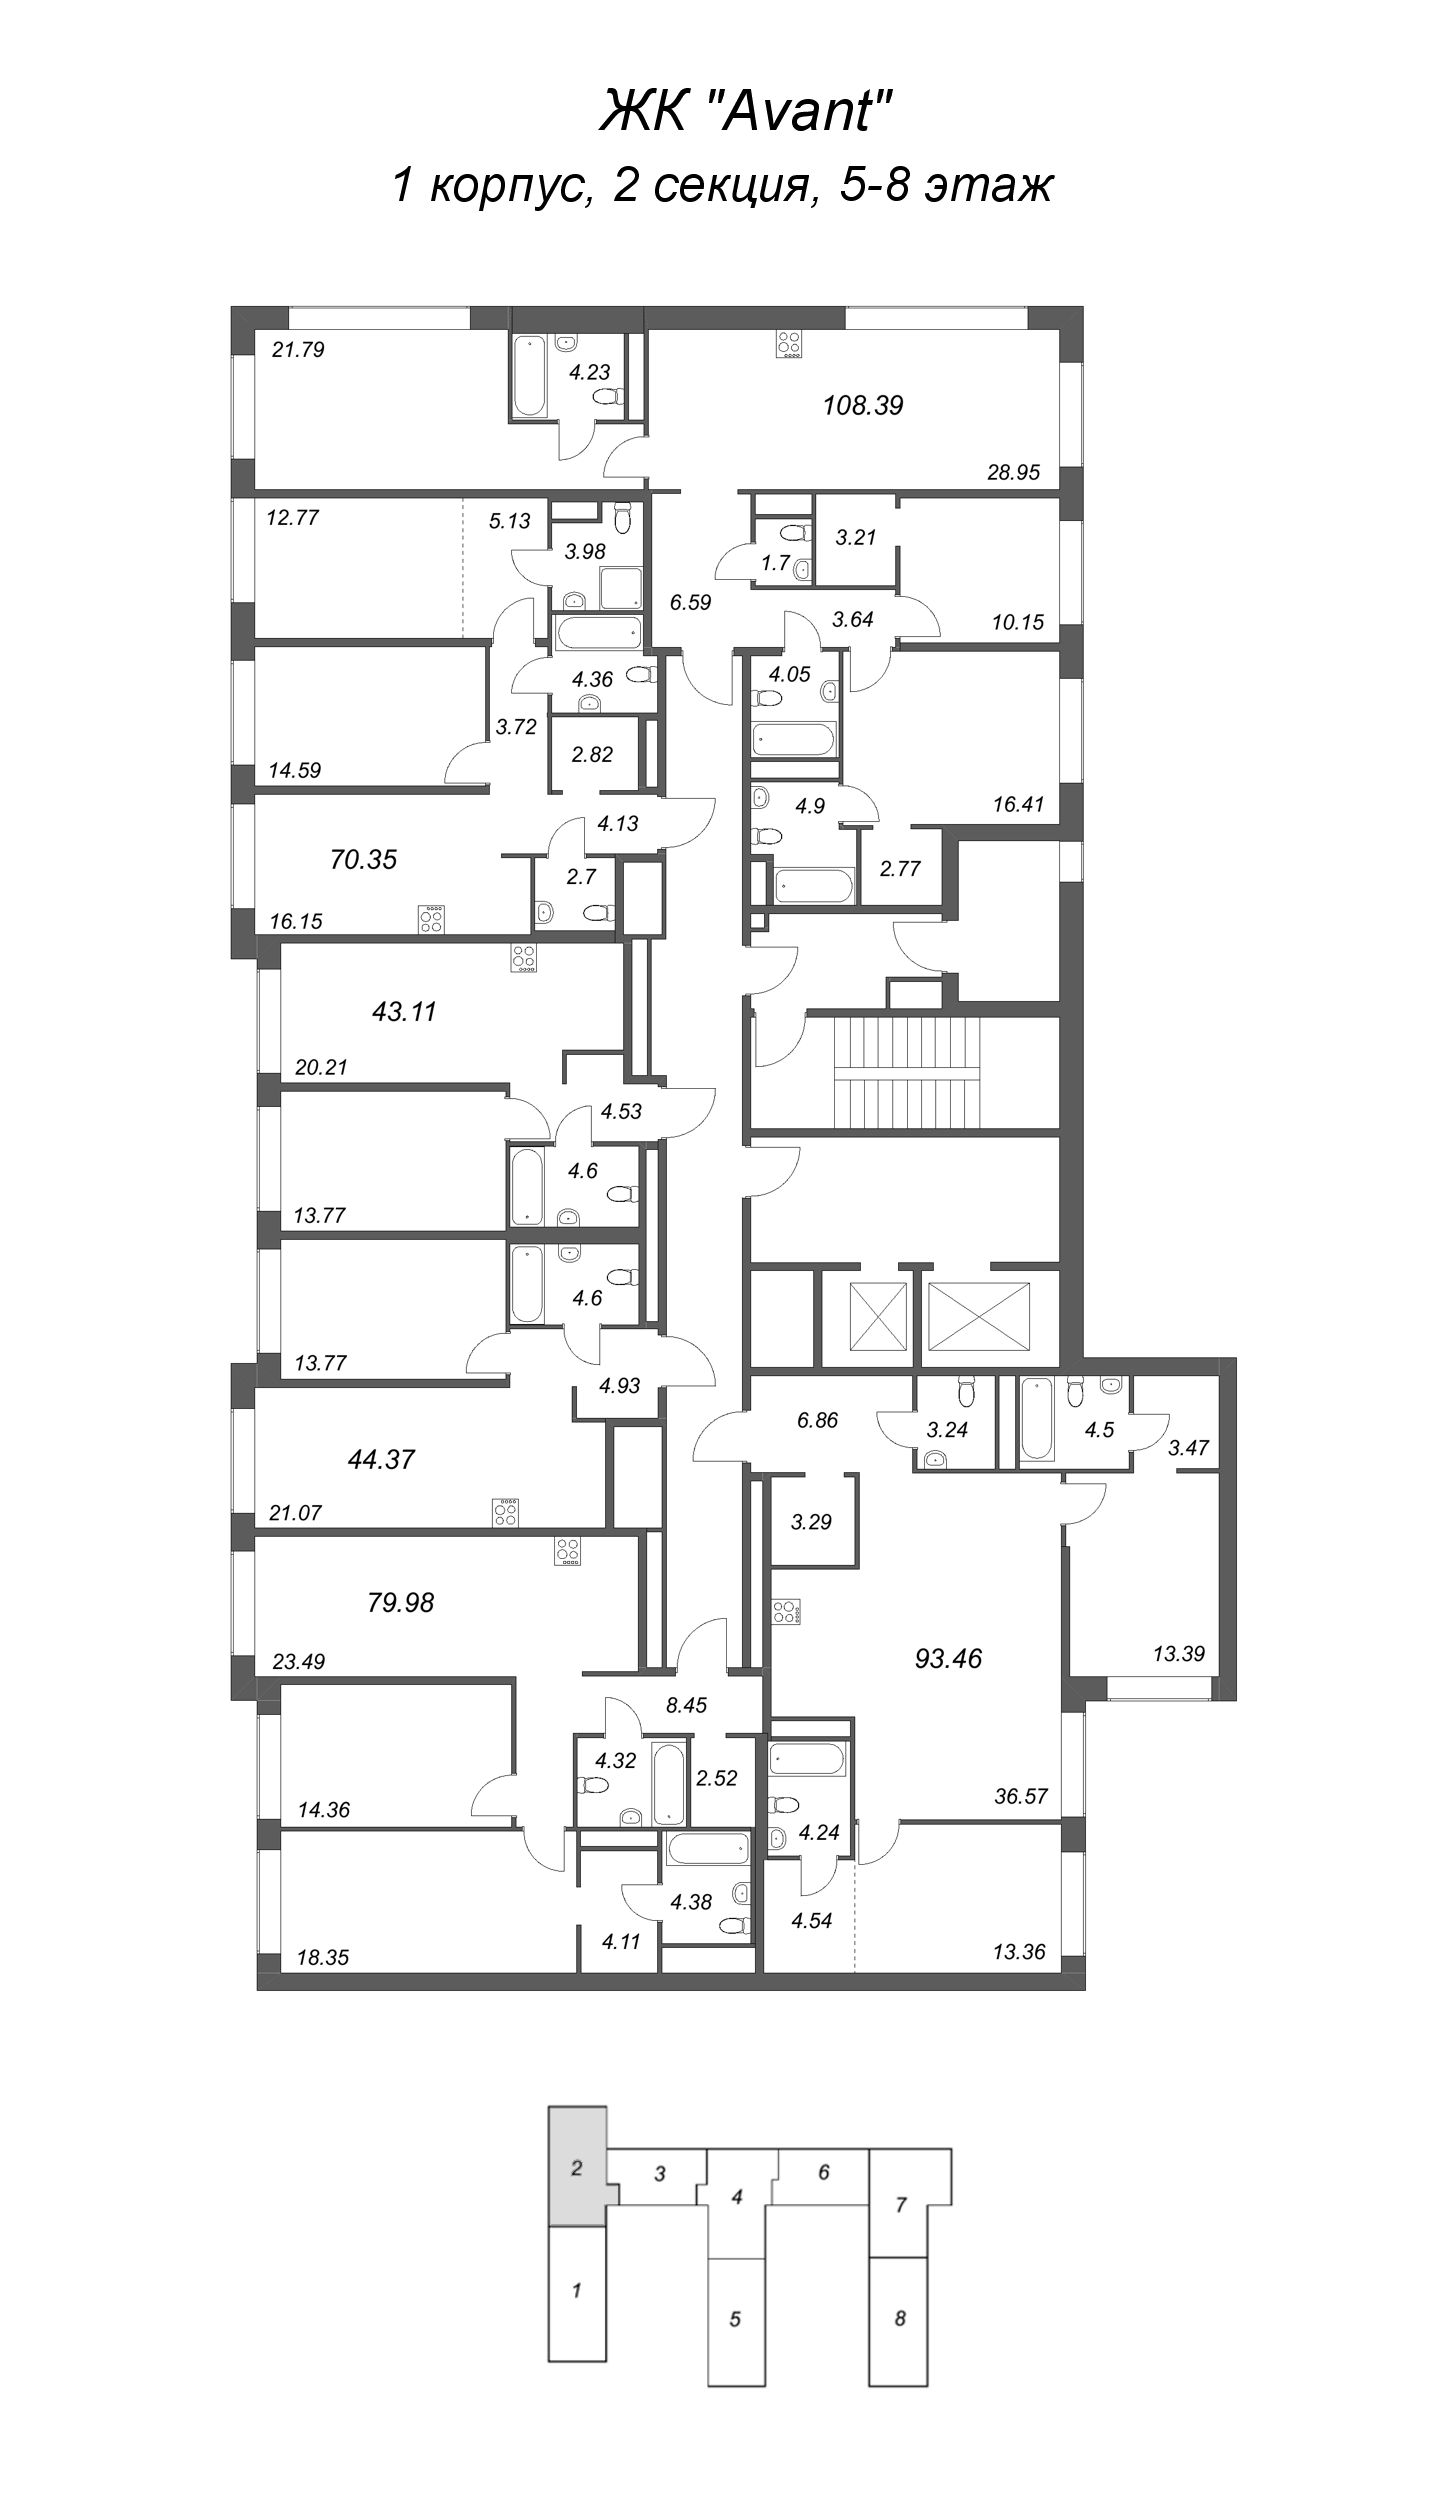 2-комнатная (Евро) квартира, 44.37 м² - планировка этажа